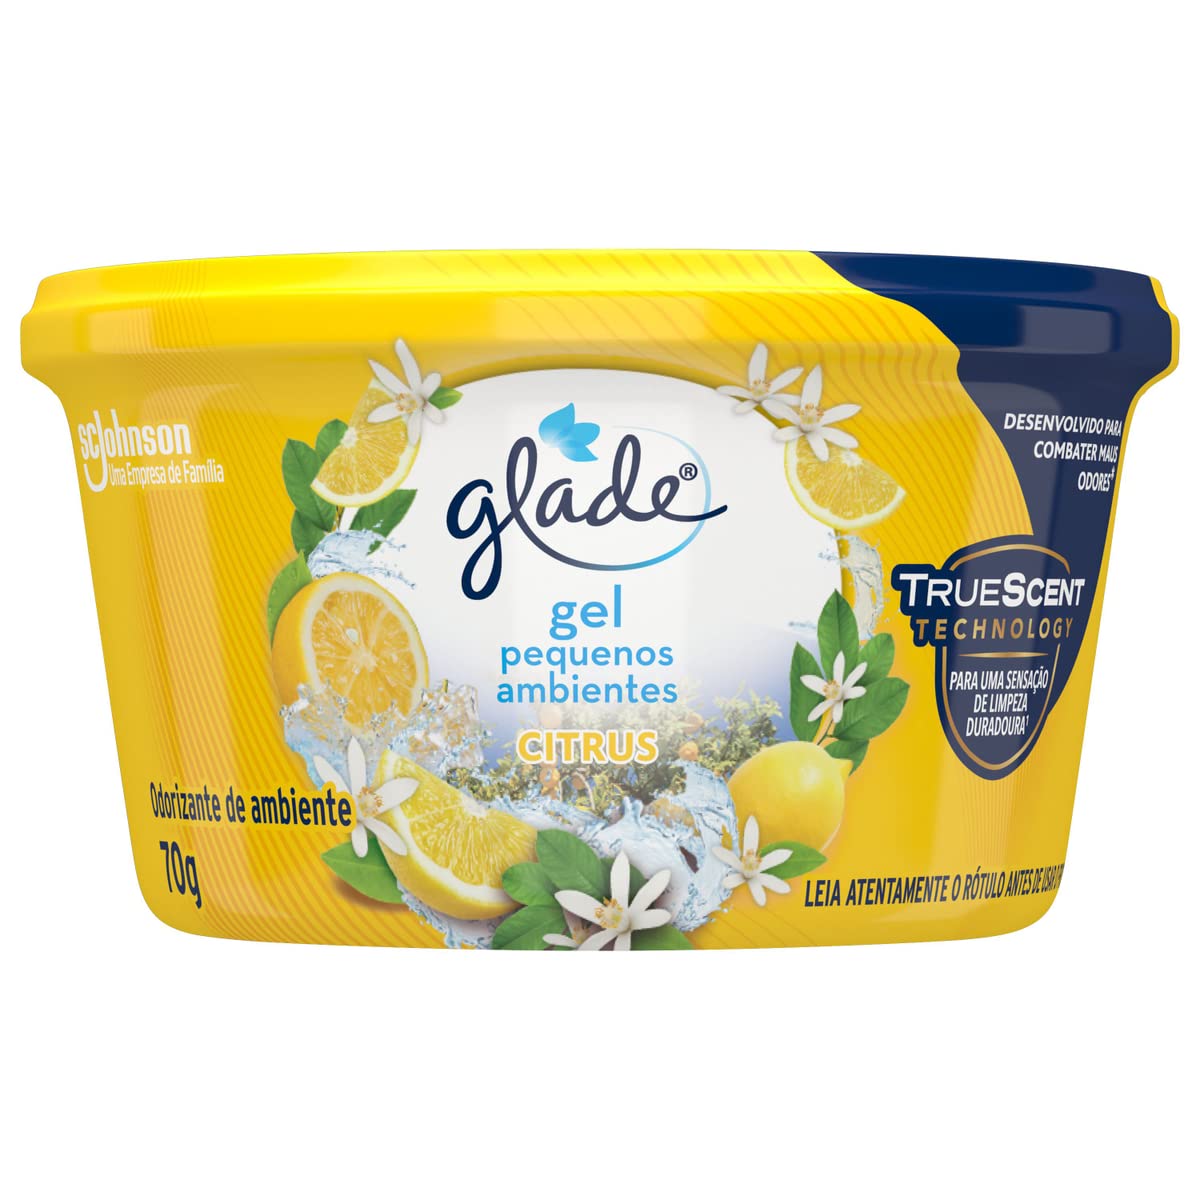 Desodorizador Gel Pequenos Ambientes Citrus 70 g, Glade